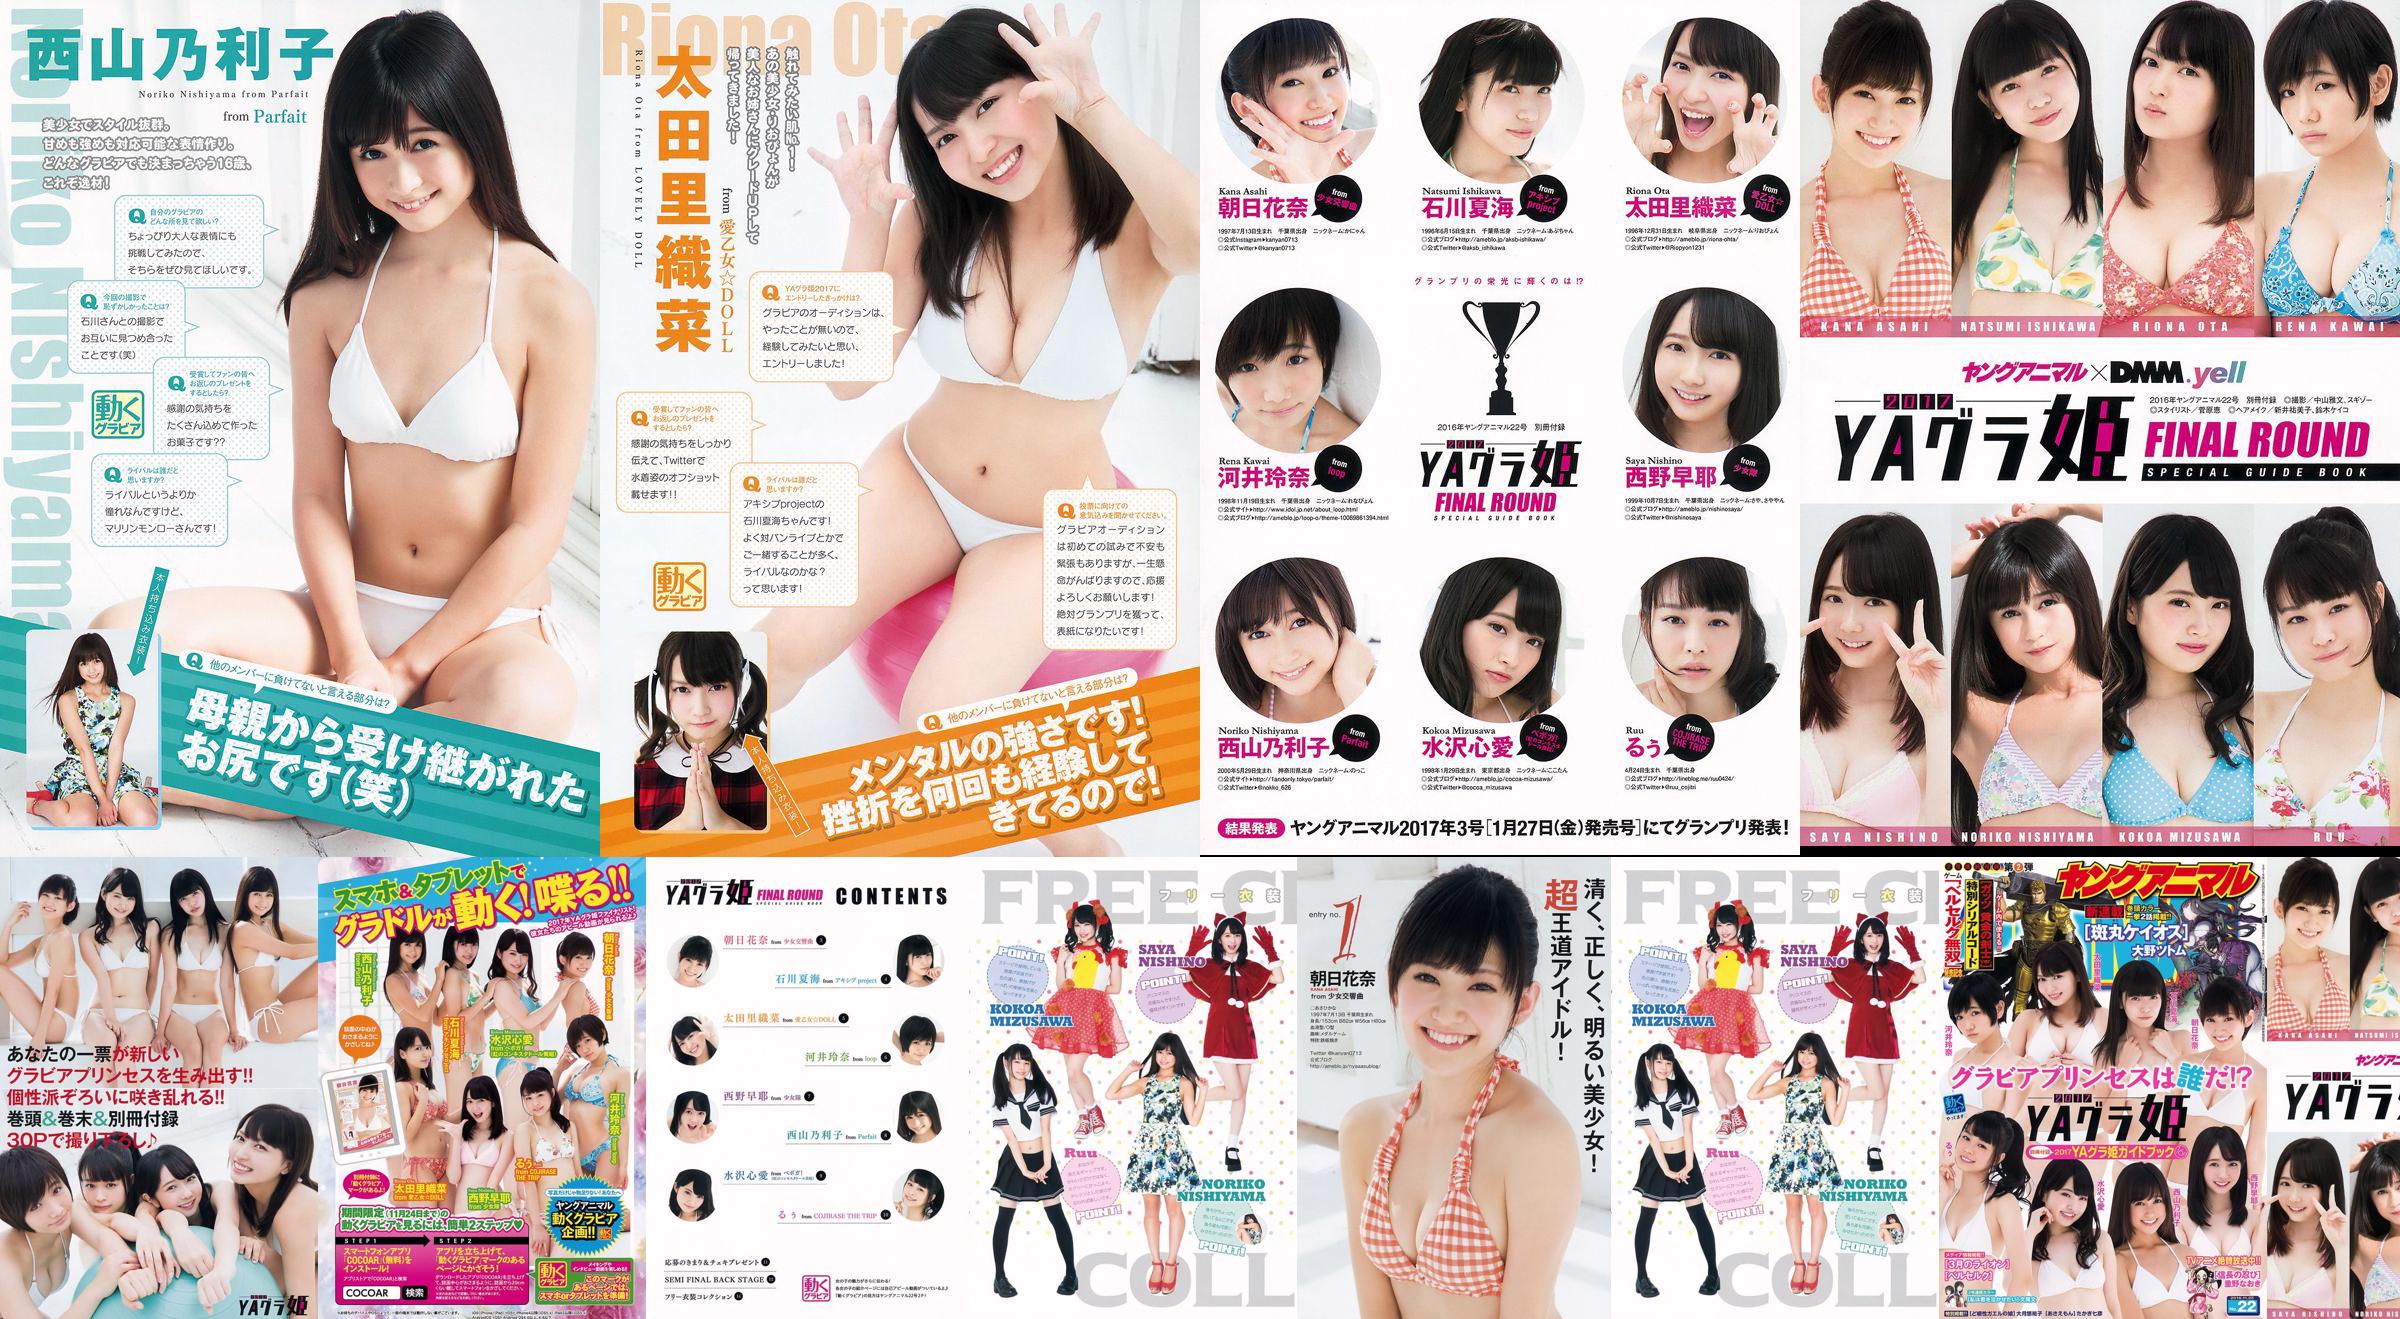 Mizusawa Beloved, Nishiyama Noriko, Nishino Haya, Kawai Reina, Ota Rina, Ishikawa Natsumi, Asahi Hana [น้องสัตว์] นิตยสารภาพถ่ายฉบับที่ 22 ประจำปี 2559 No.5077eb หน้า 3